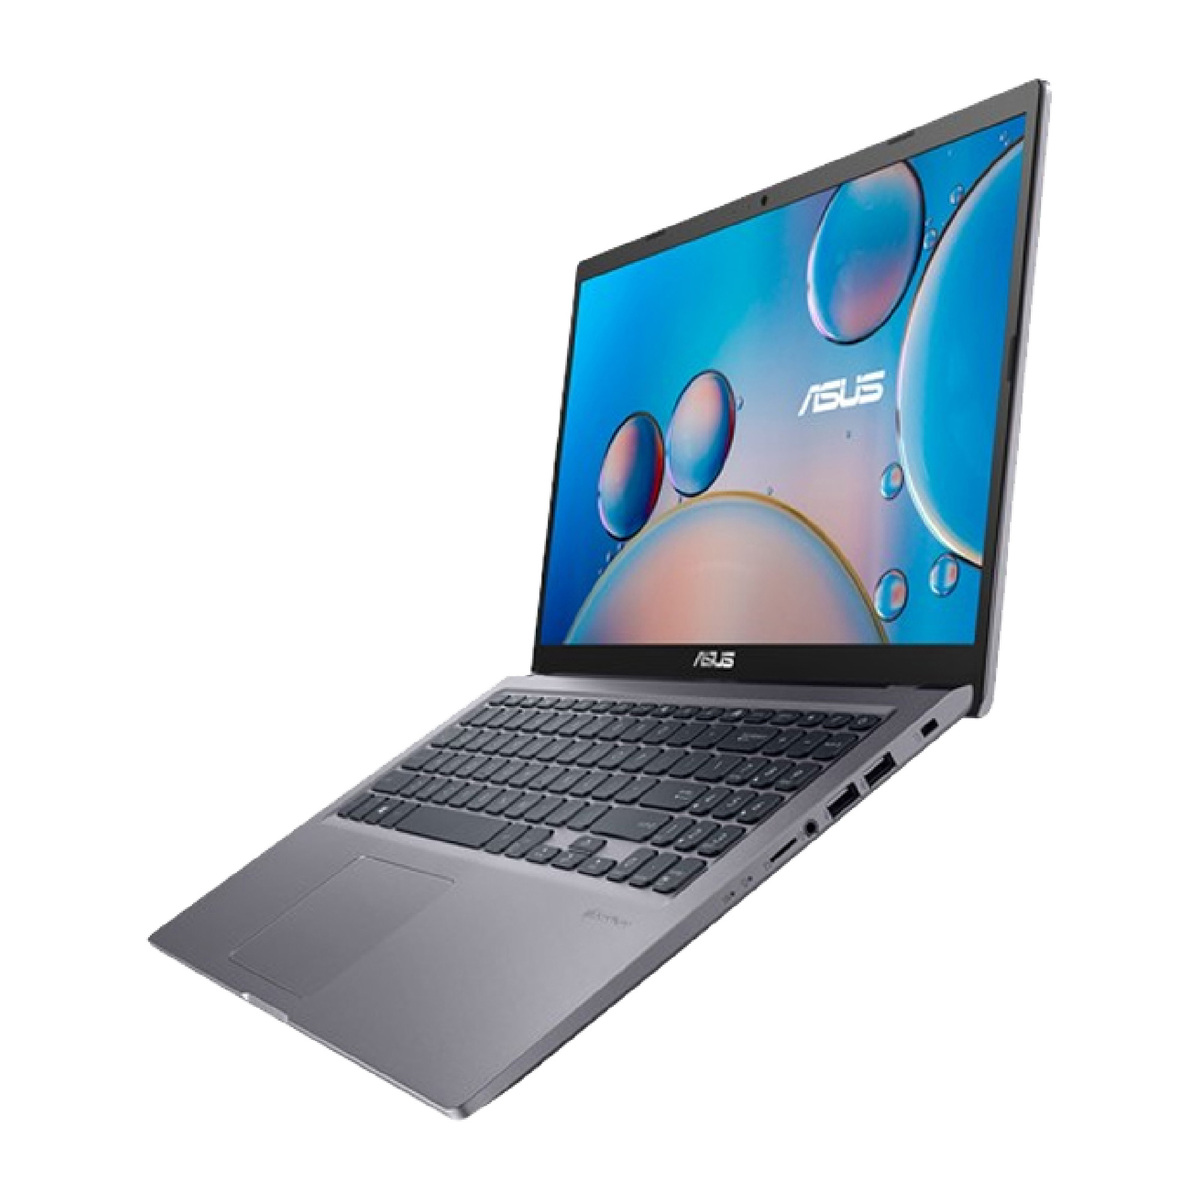 Asus Notebook M515DA-BR1083T,AMD R3,4GB RAM,256GB SSD,AMD Radeon Graphics,15.6"HD,Windows 10,English/Arabic Keyboard